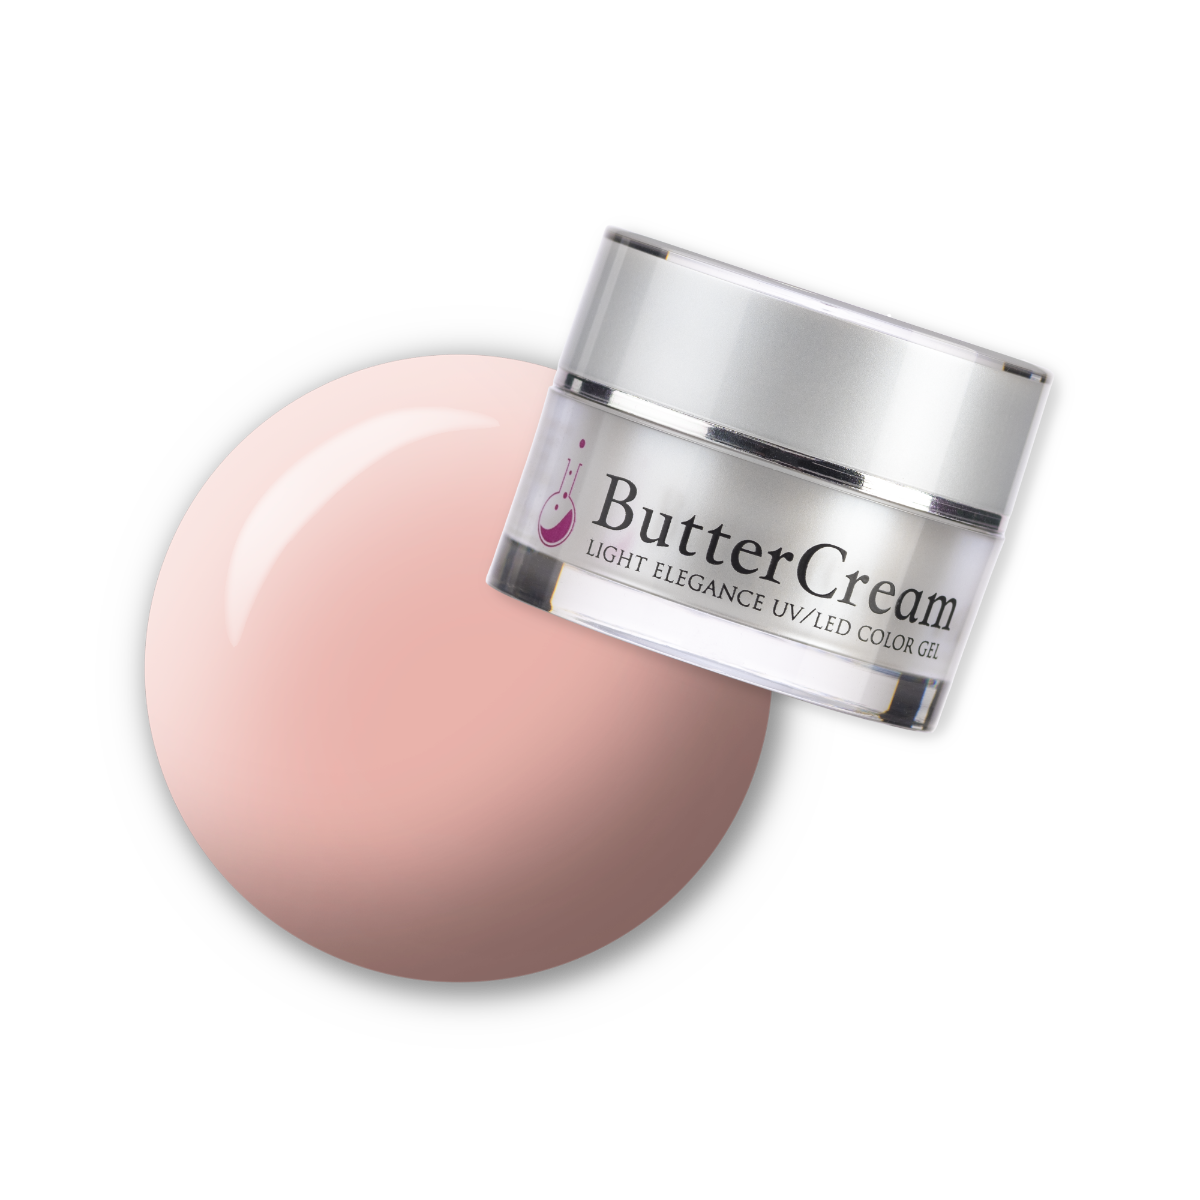 Light Elegance ButterCream - Phone Home - Creata Beauty - Professional Beauty Products